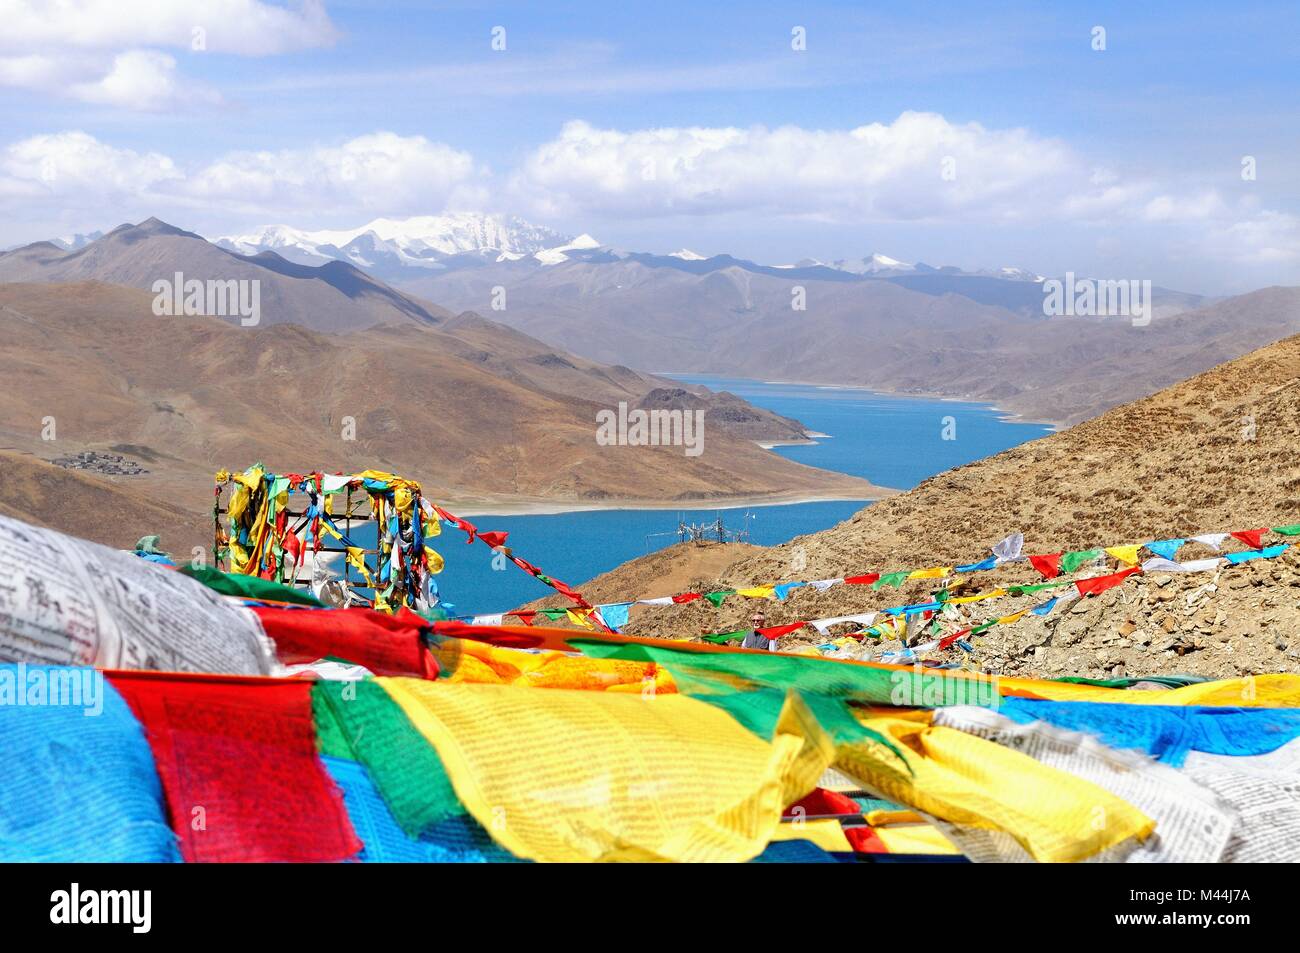 Kampa La pass to Tibet China Mountain Noijin Kang Stock Photo